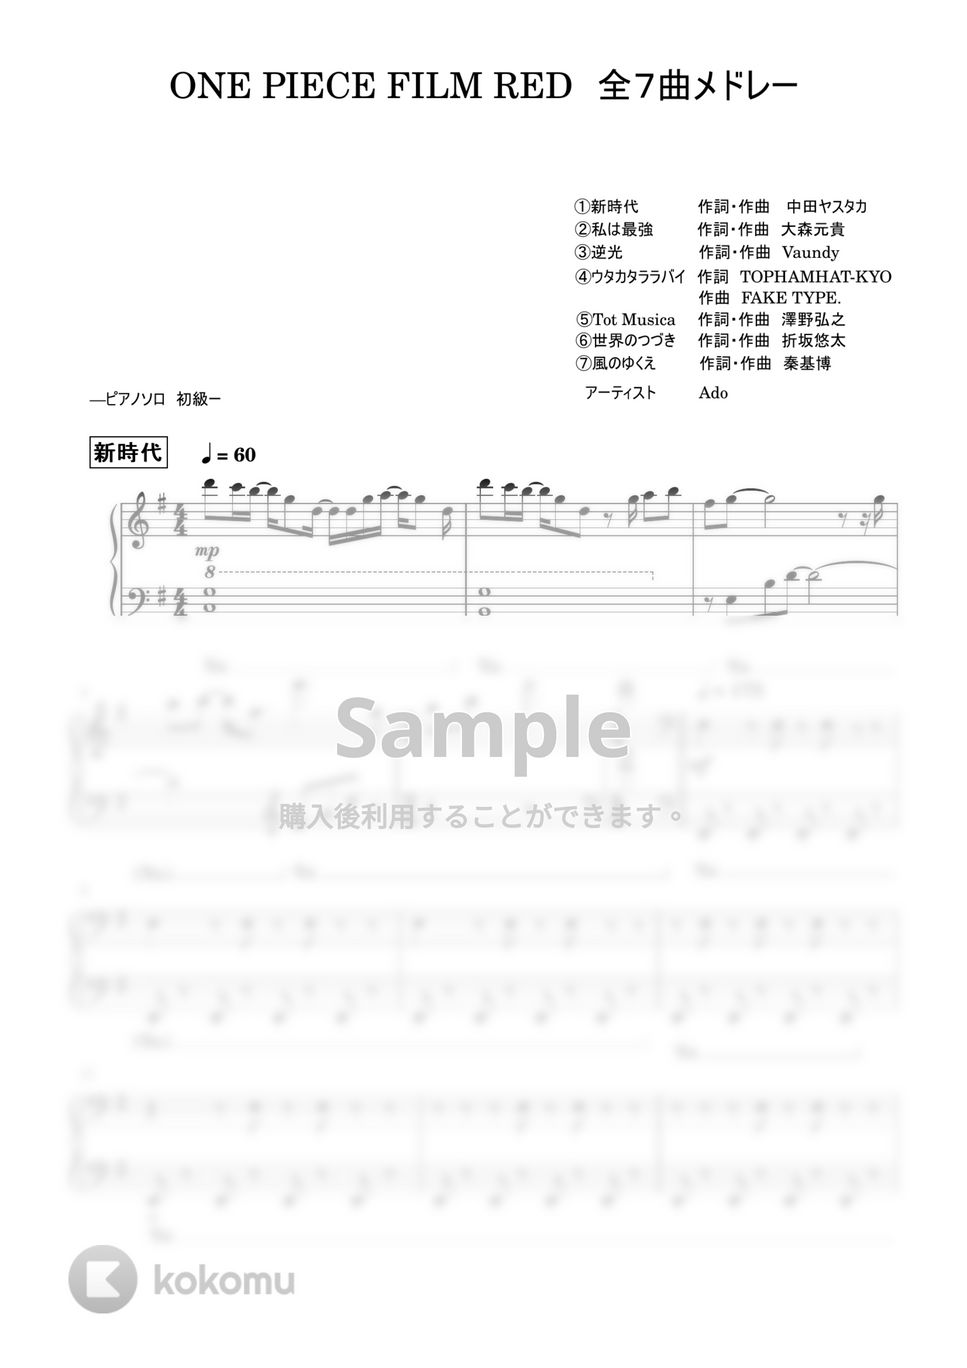 Ado - ONE PIECE FILM RED全７曲メドレー (初級レベル) by Saori8Piano